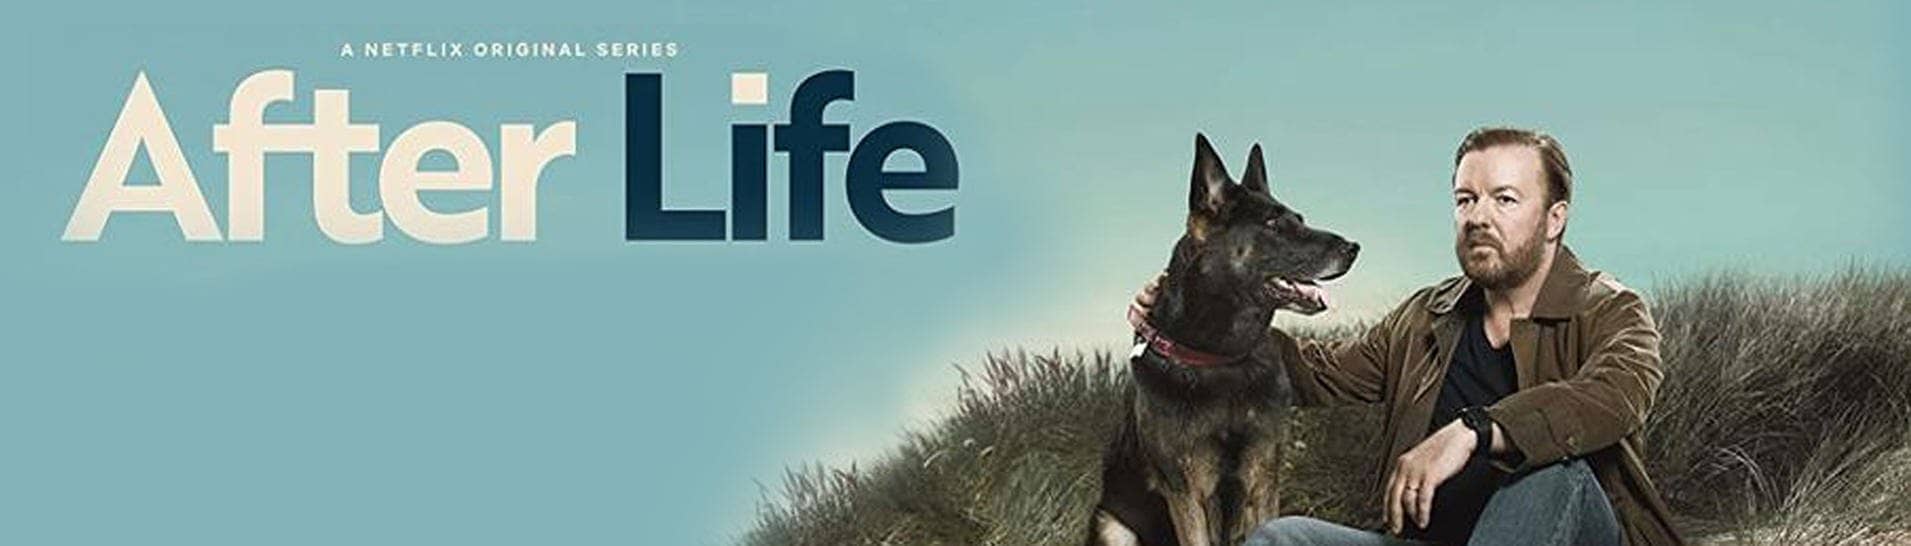 Serie After Life Netflix (Foto: Derek Productions Limited)